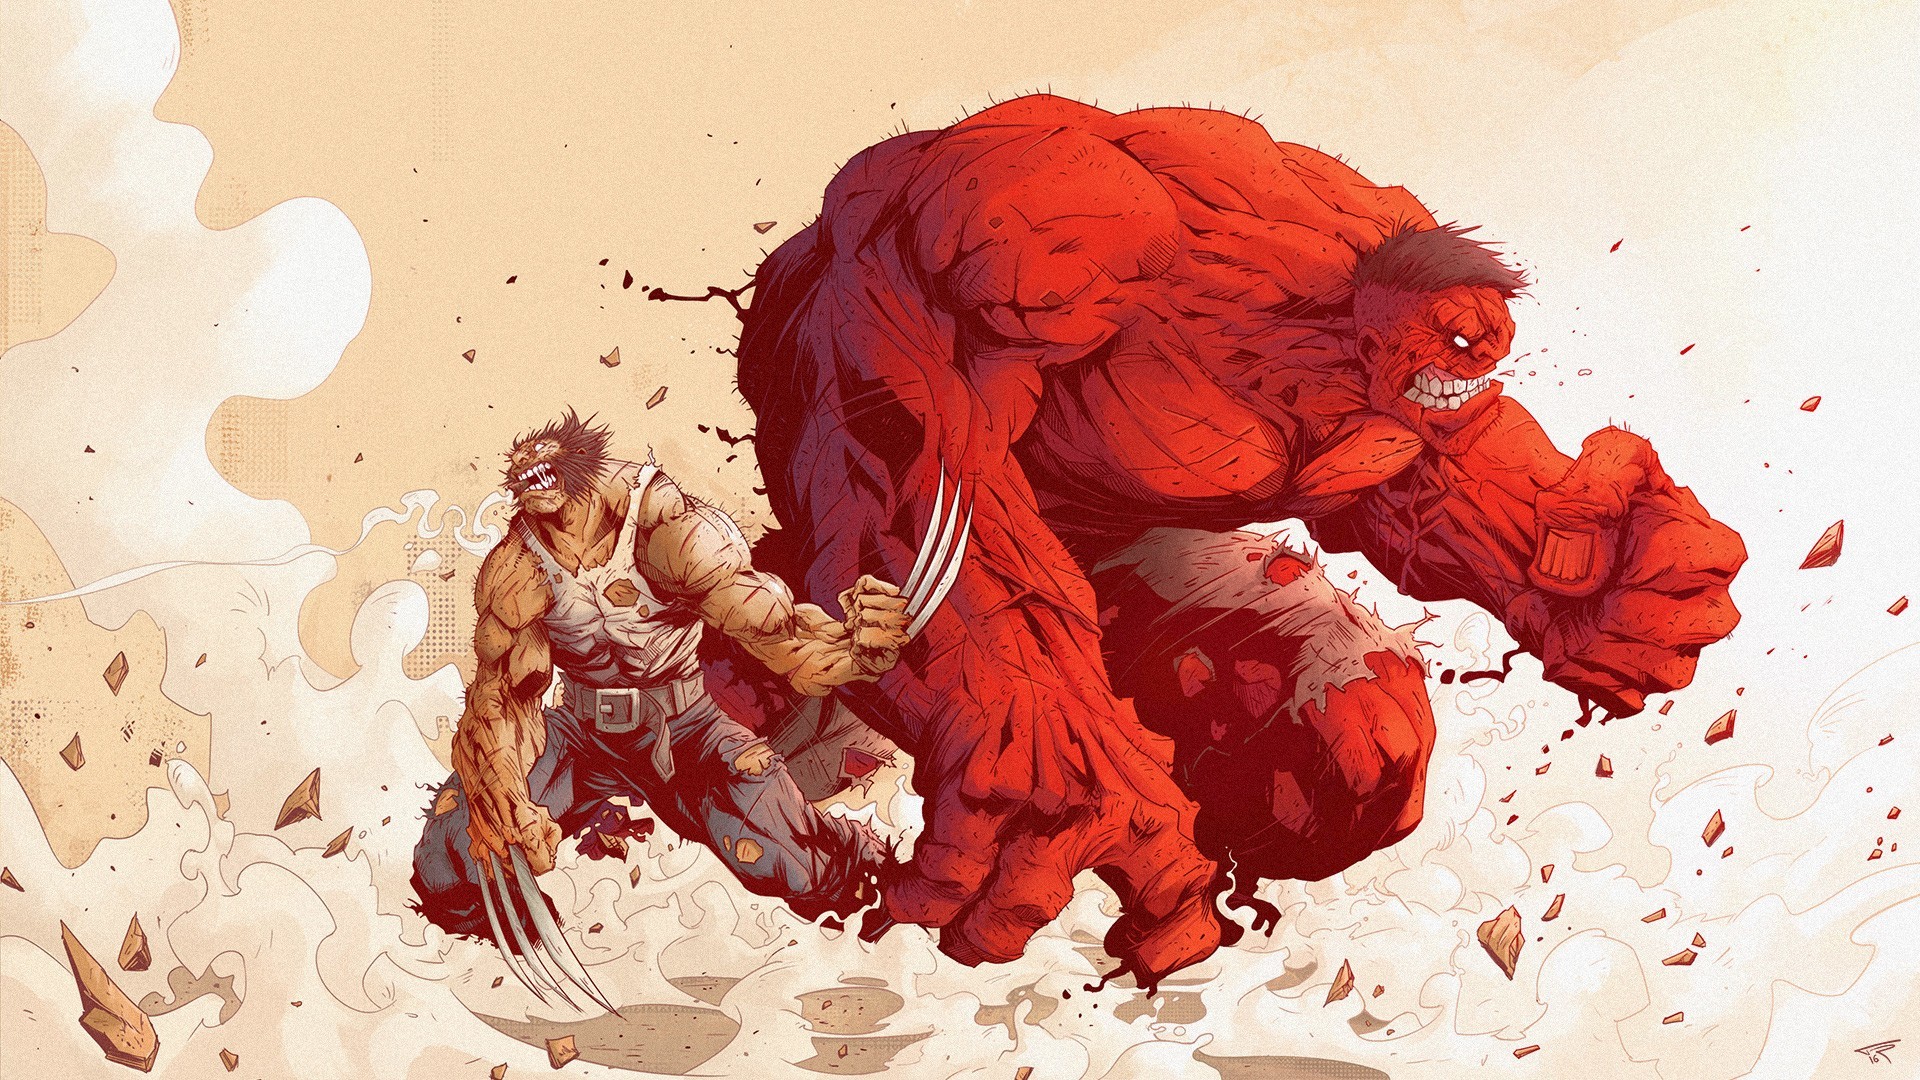 Wallpaper Angry hulk, wolverine, logan, marvel comics artwork